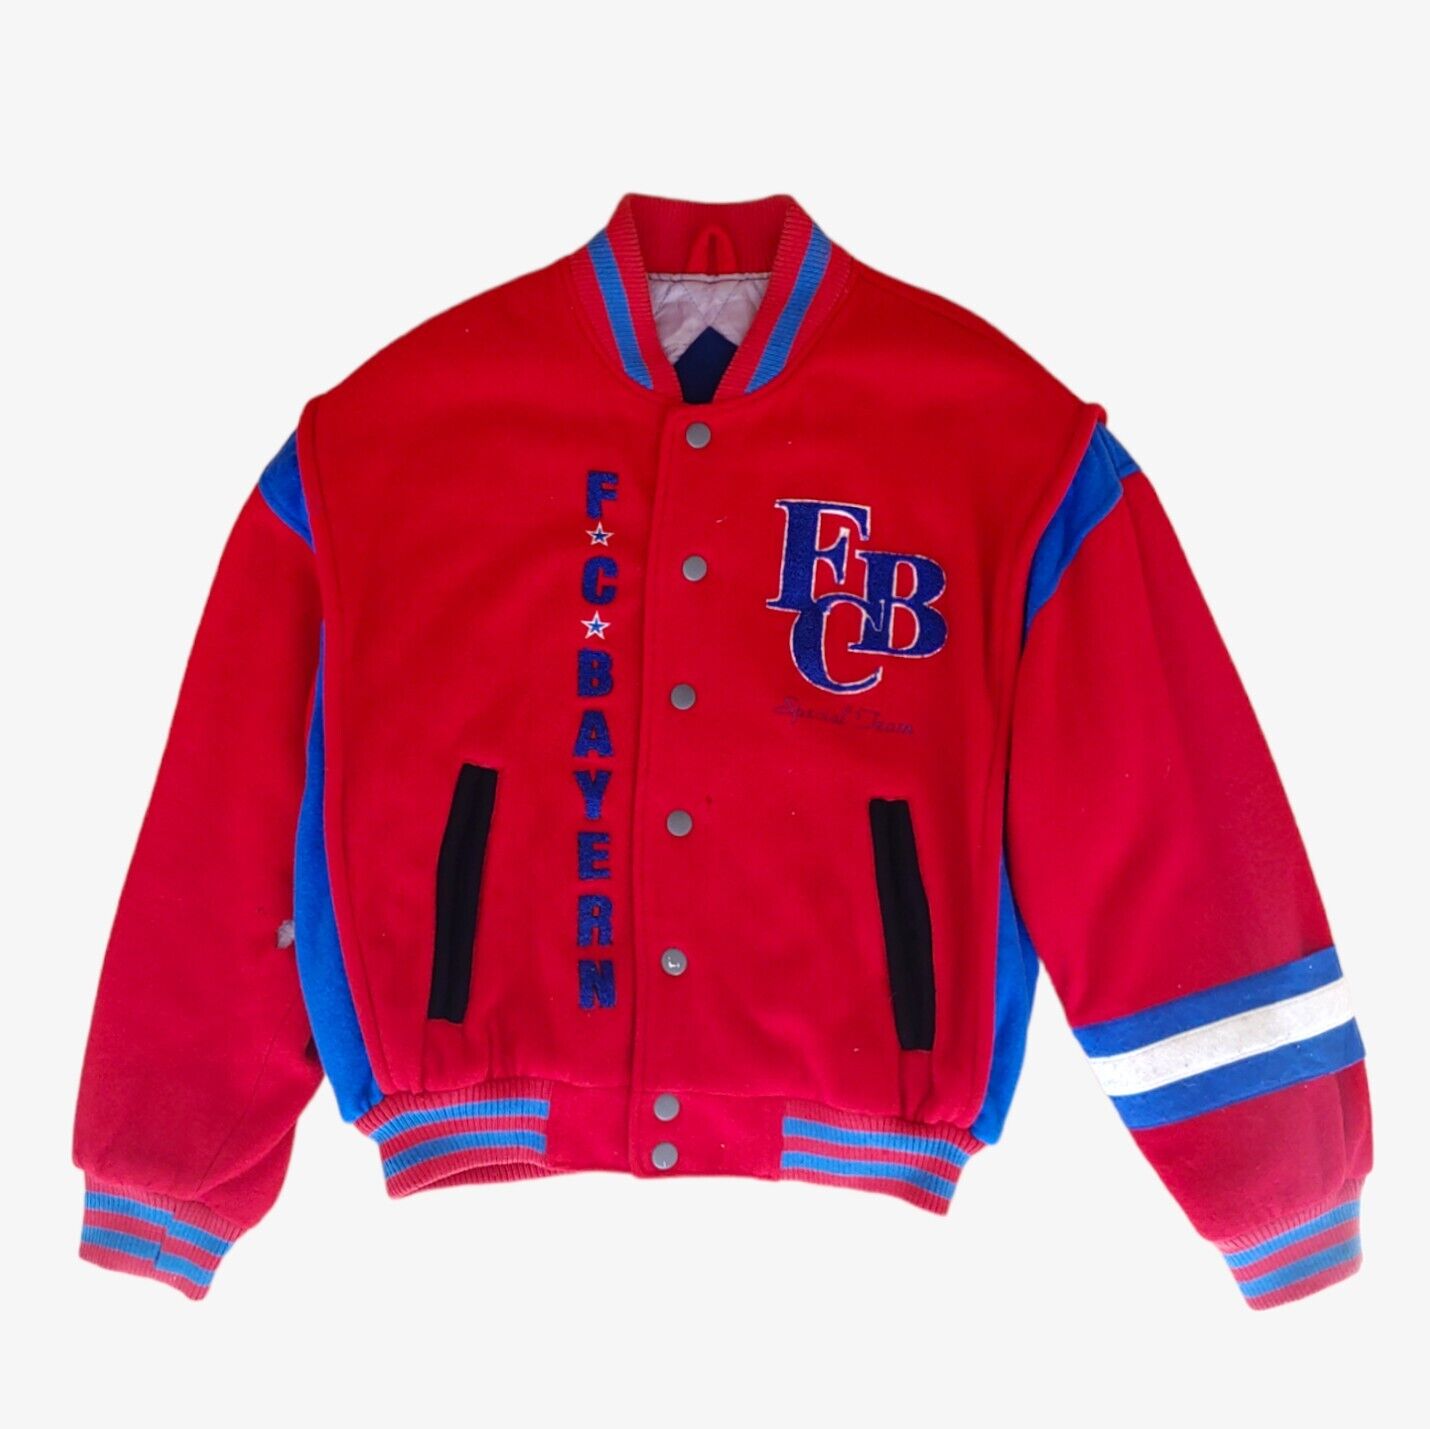 Vintage 1993 Bayern Munich Munchen Football Club Red & Blue Wool Varsity Jacket - Casspios Dream